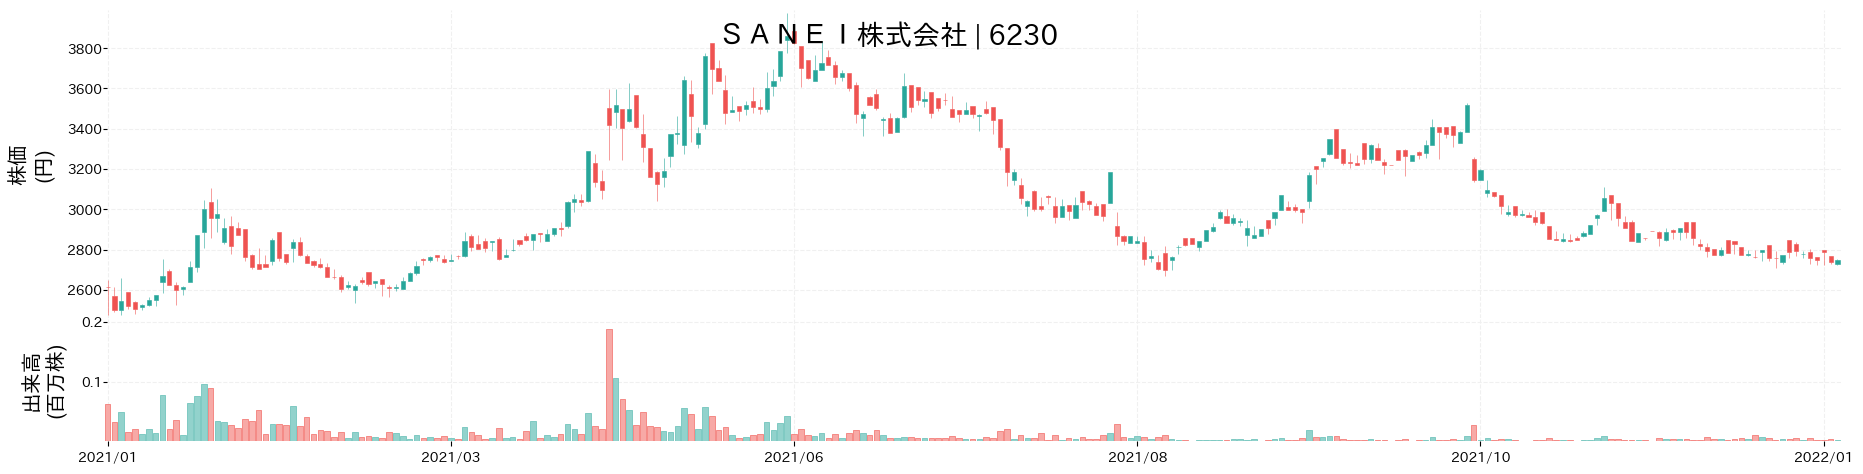 SANEIの株価推移(2021)